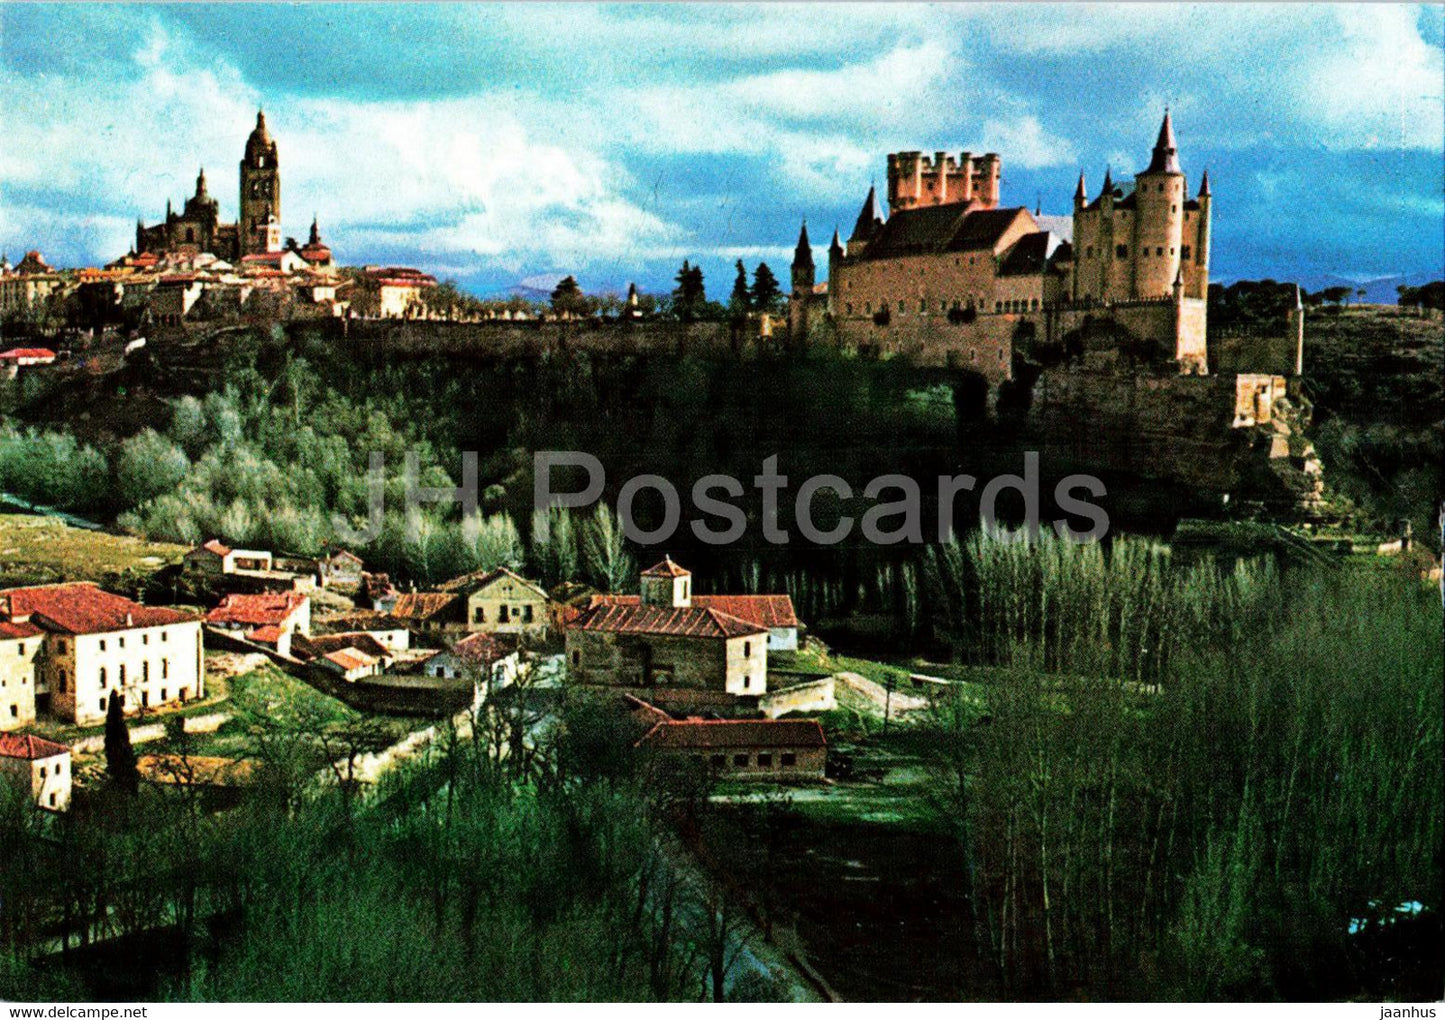 Segovia - Vista General - general view - 825 - Spain - unused - JH Postcards